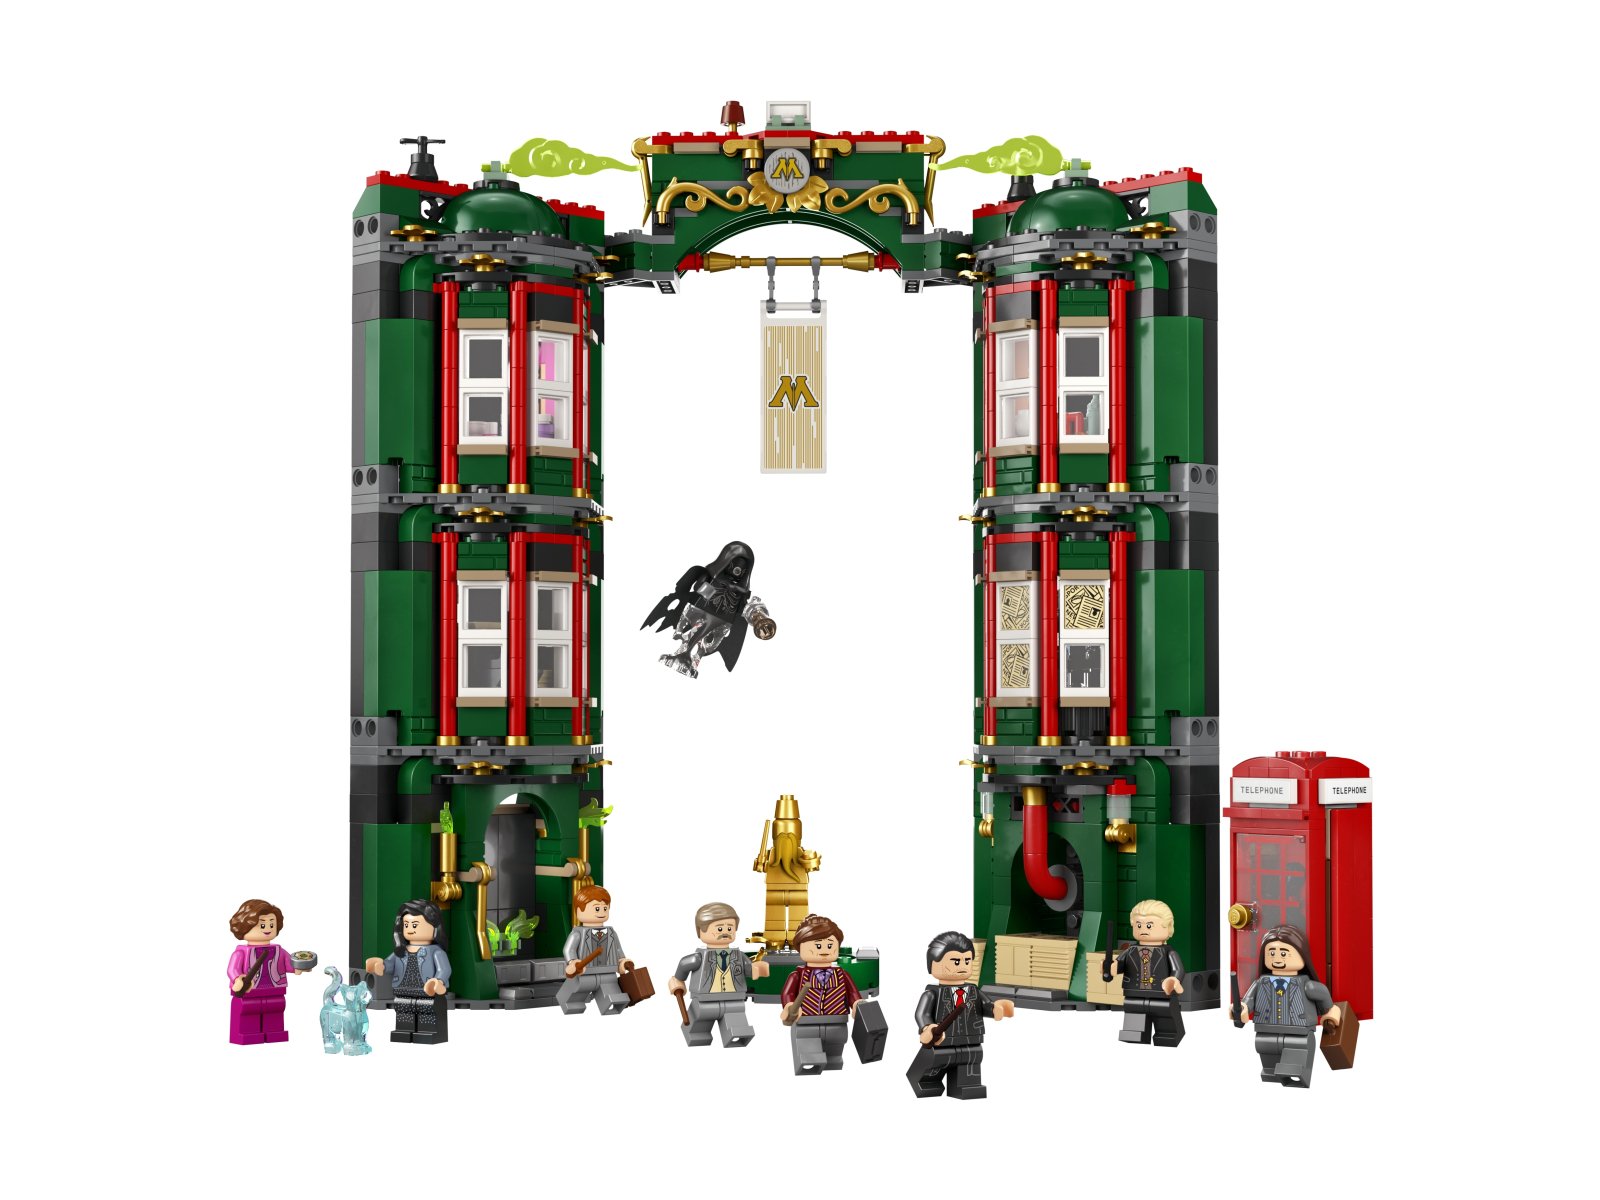 LEGO Harry Potter 76403 Ministerstwo Magii™